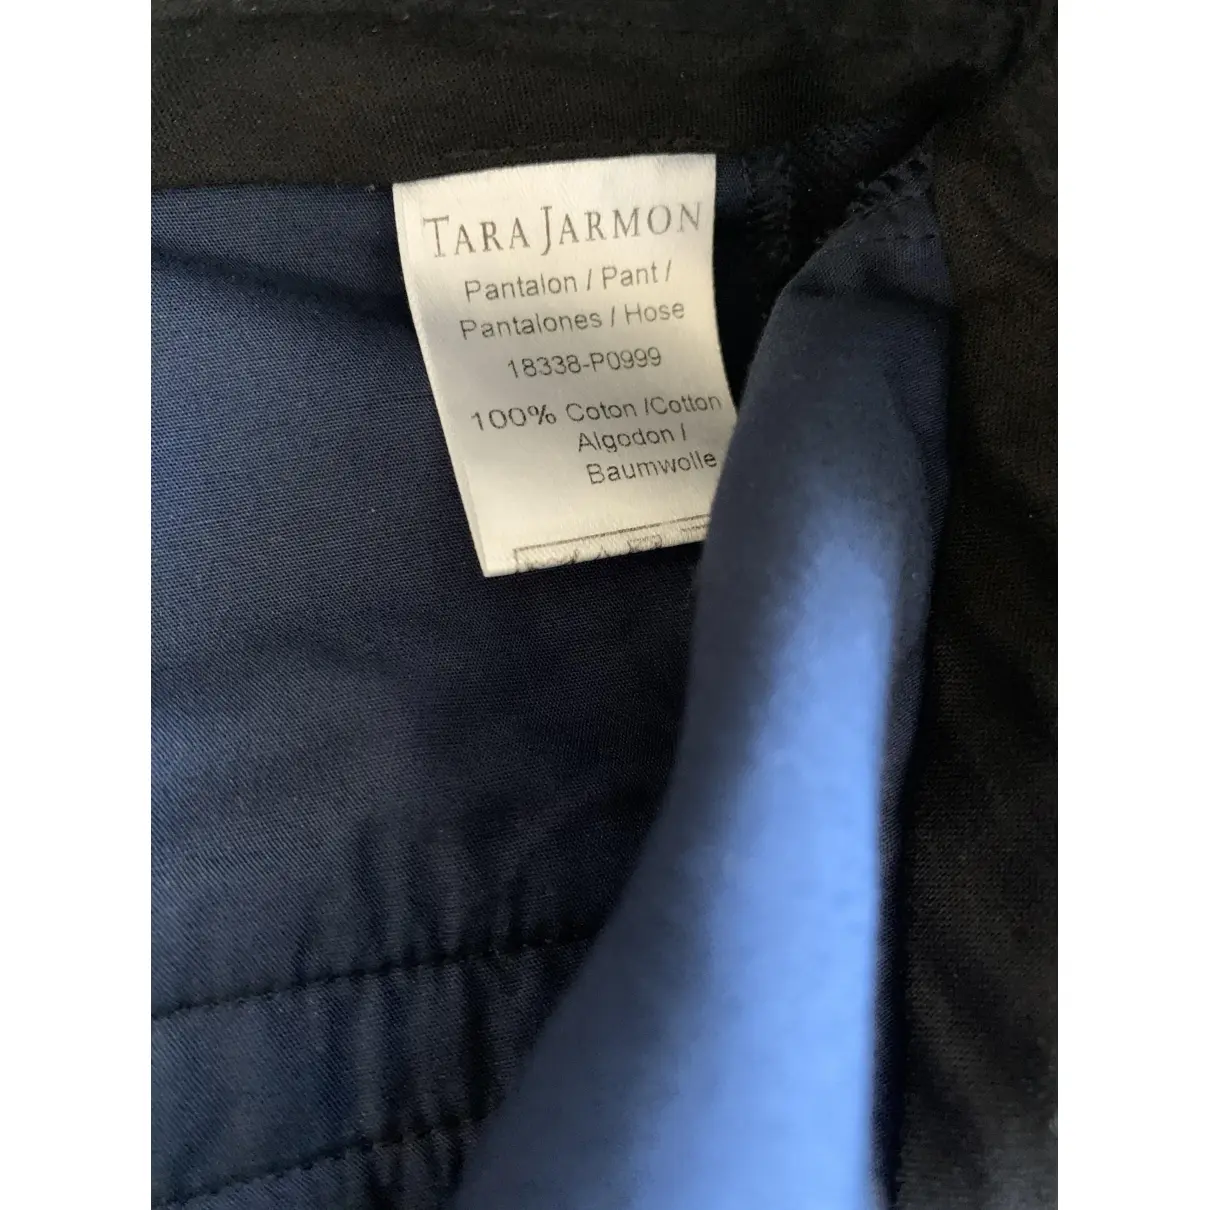 Large pants Tara Jarmon